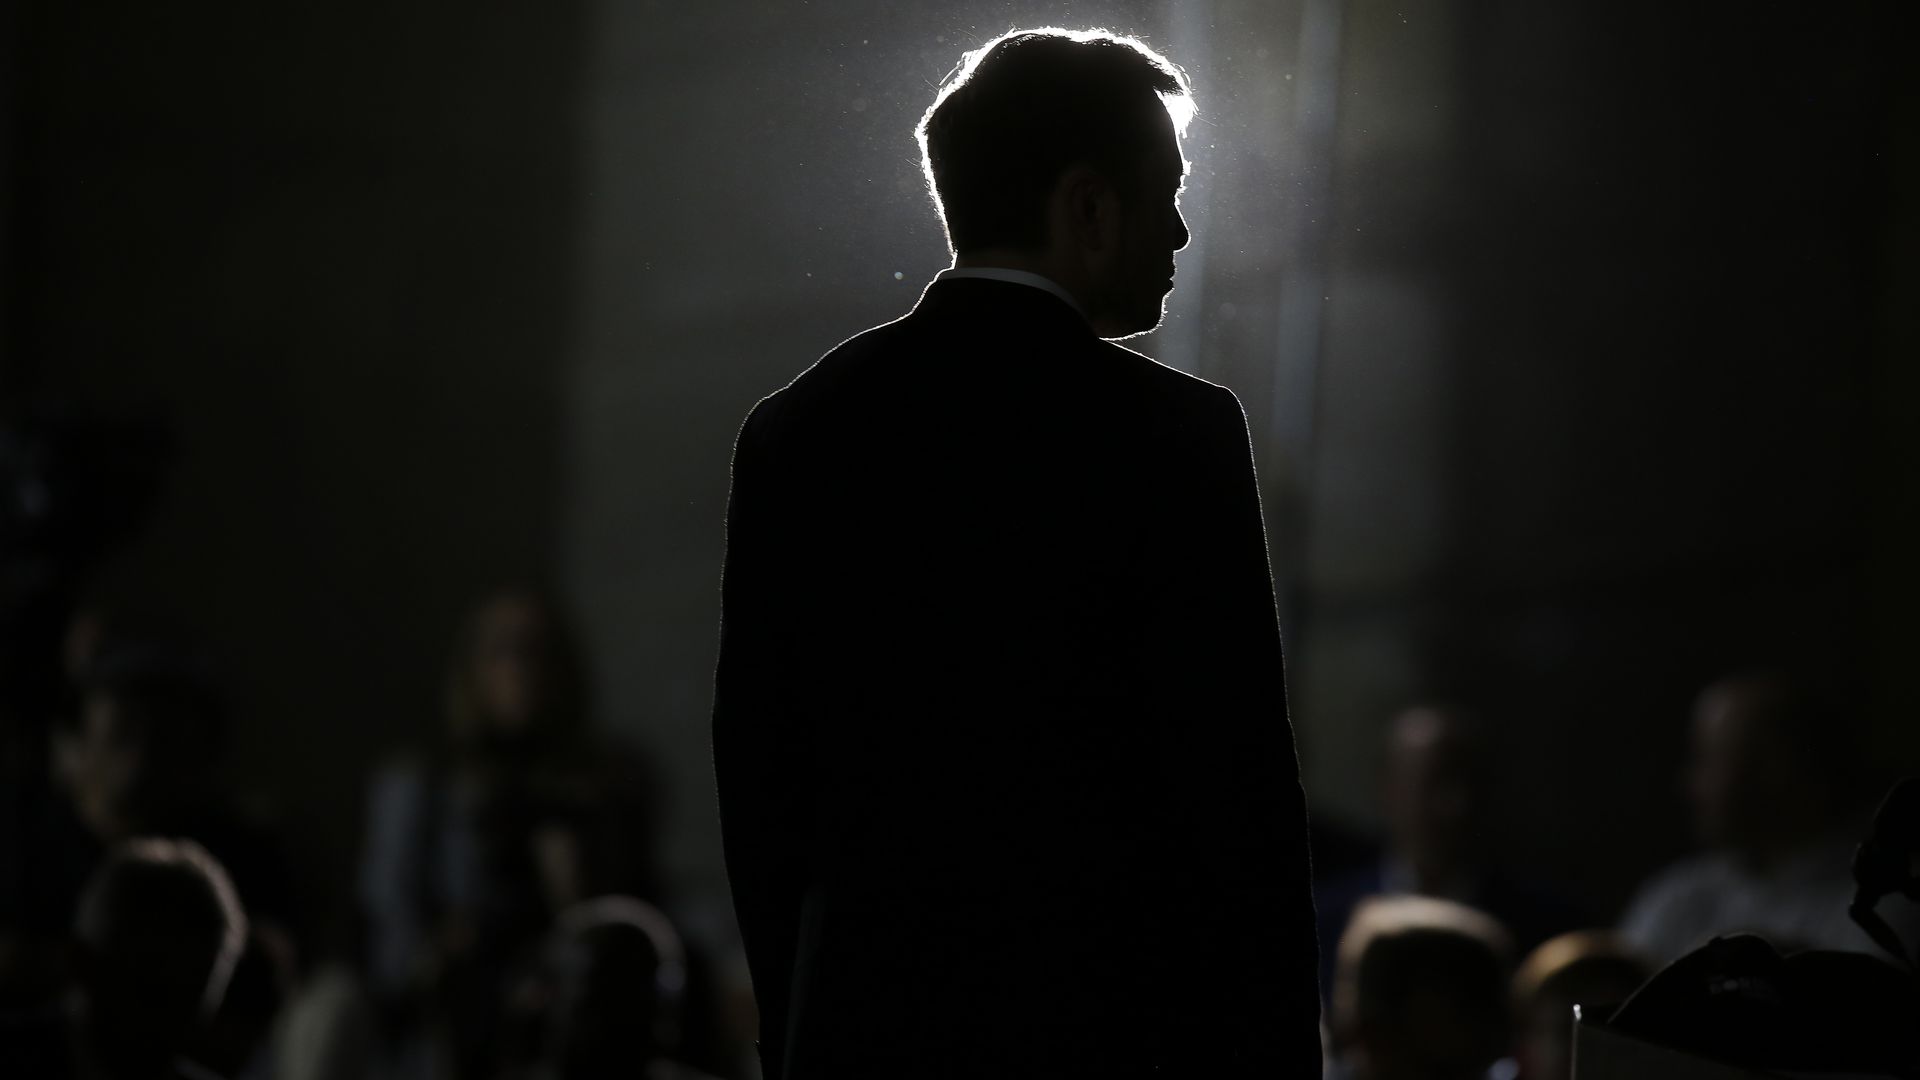 A dark image with the dark silhouette of Elon Musk